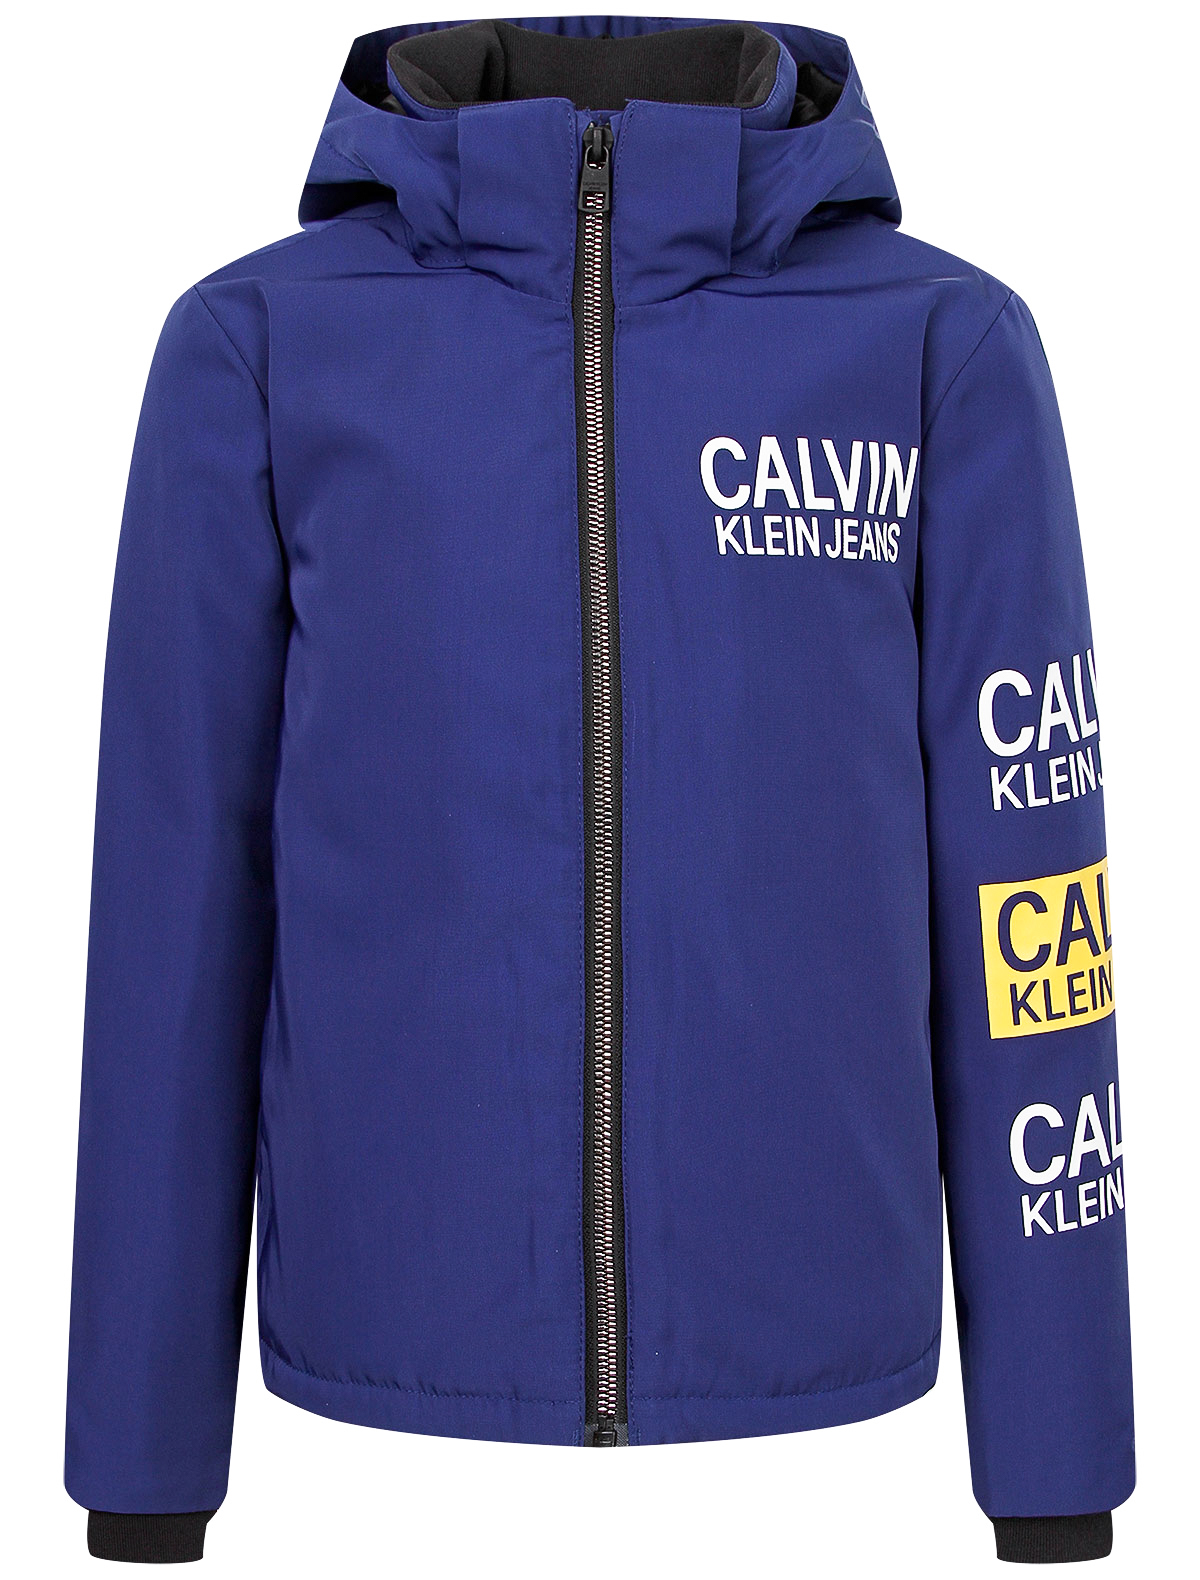 Куртка CALVIN KLEIN JEANS 2196541, цвет синий, размер 9 1074519072291 - фото 1